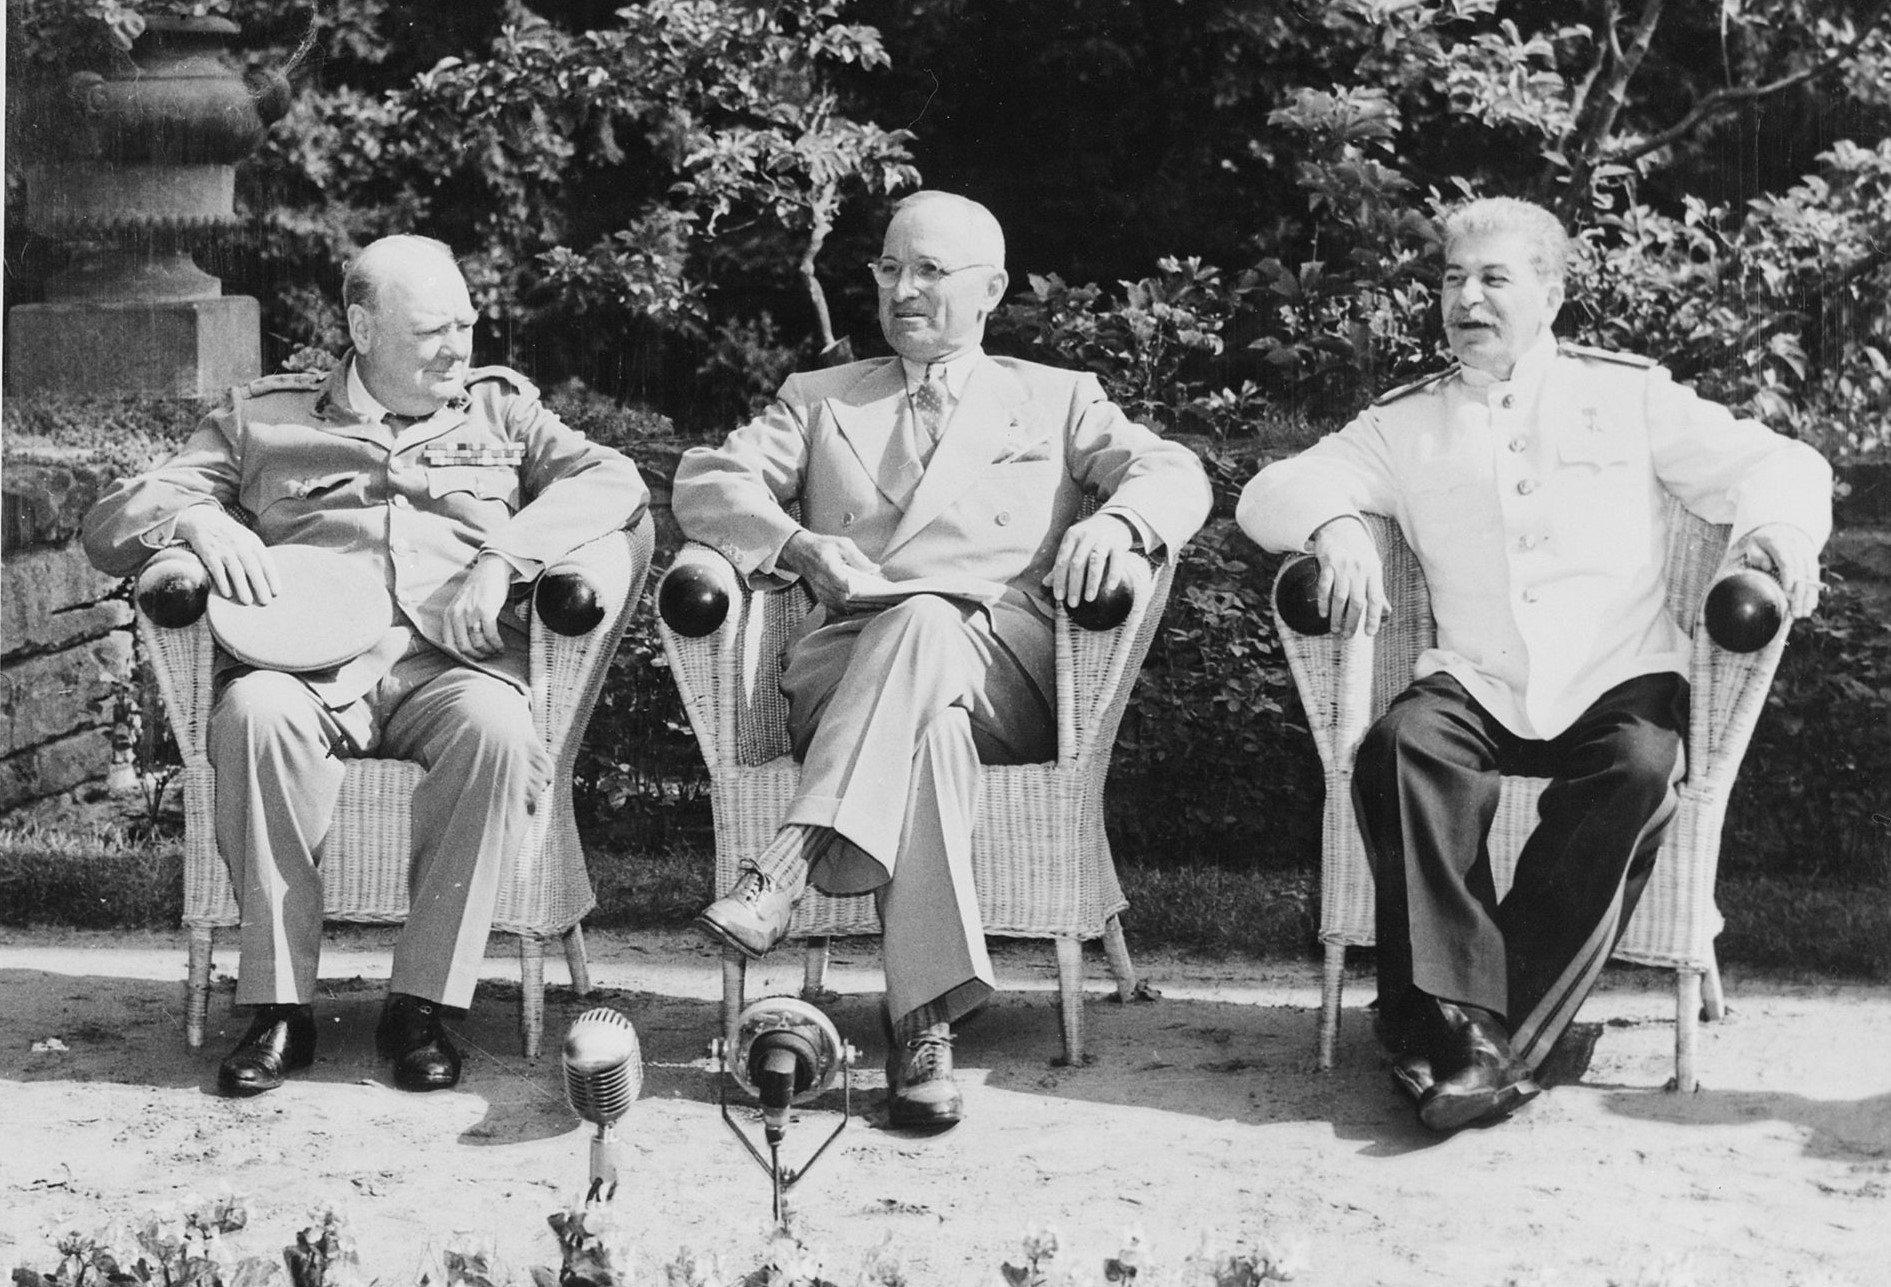 Potsdam conference